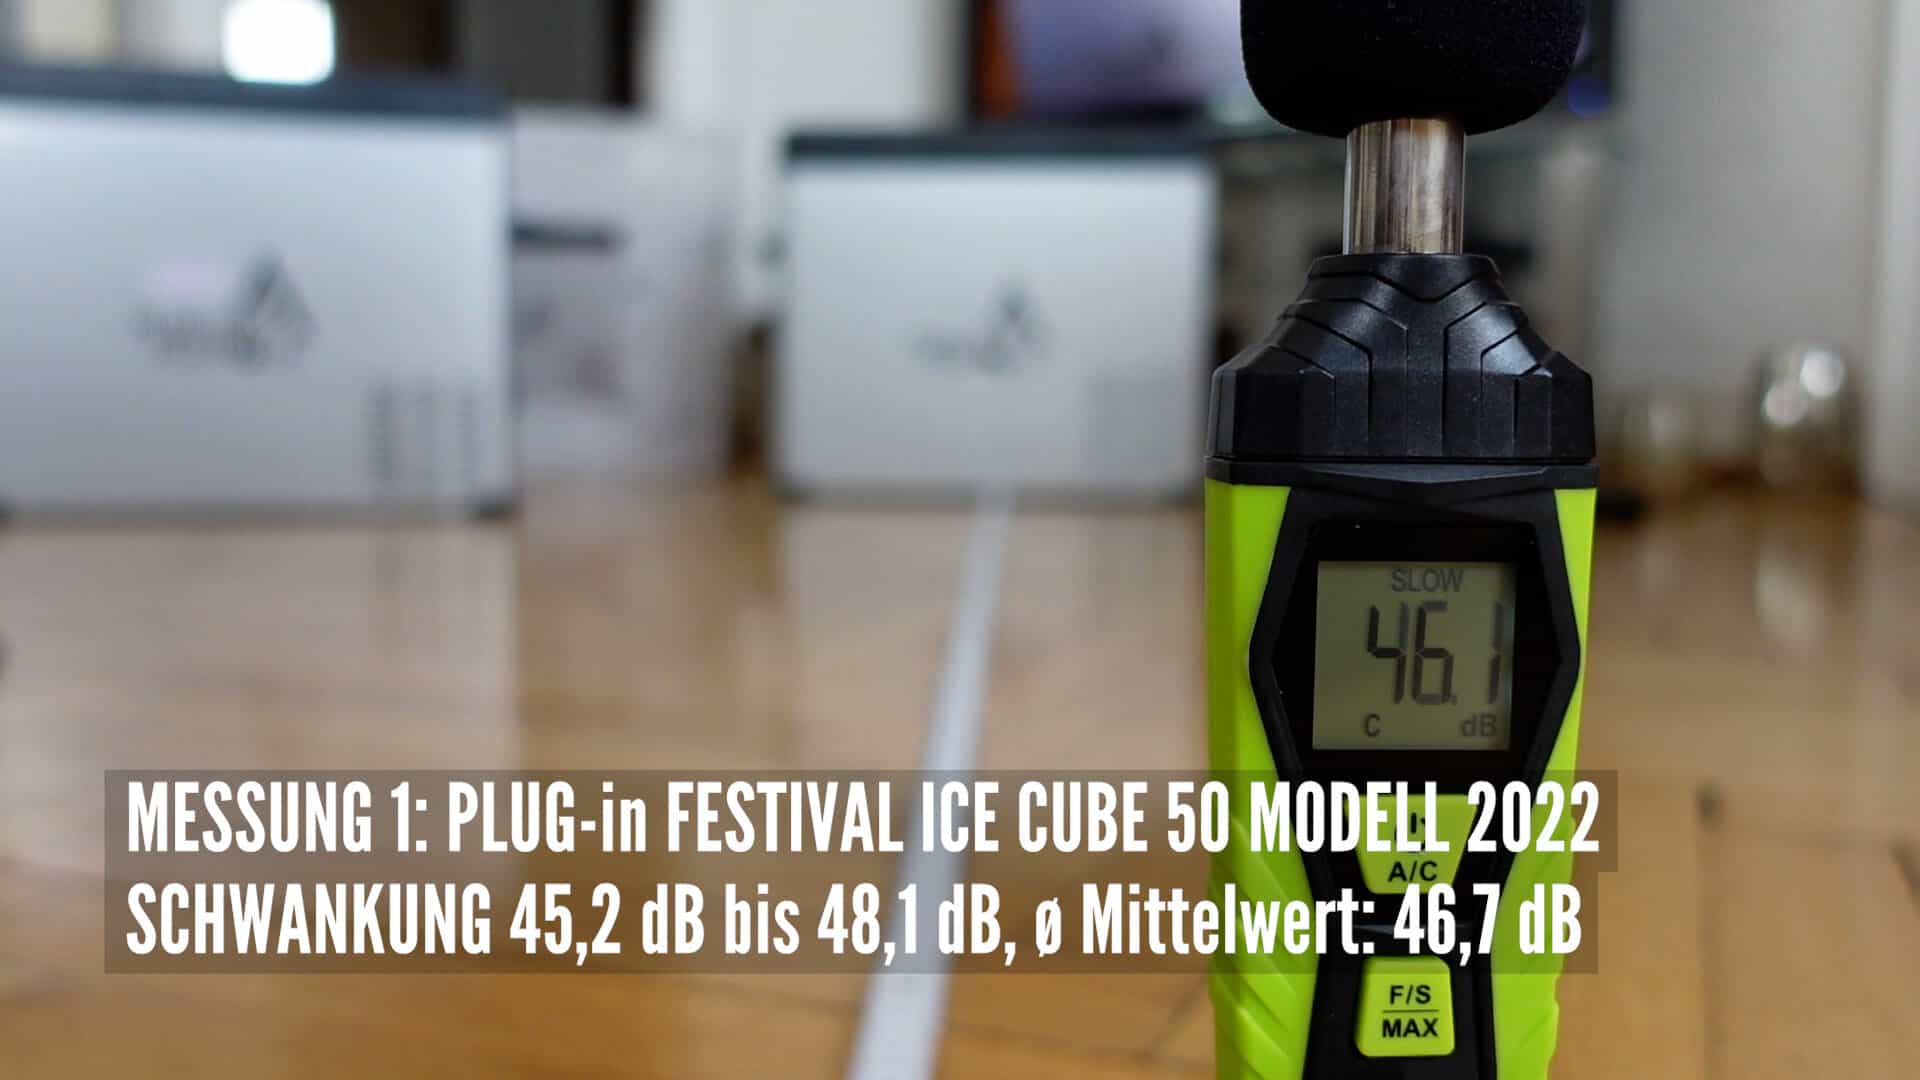 Preiswerte Kompressor Kühlbox - Plug in Festivals IceCube 40